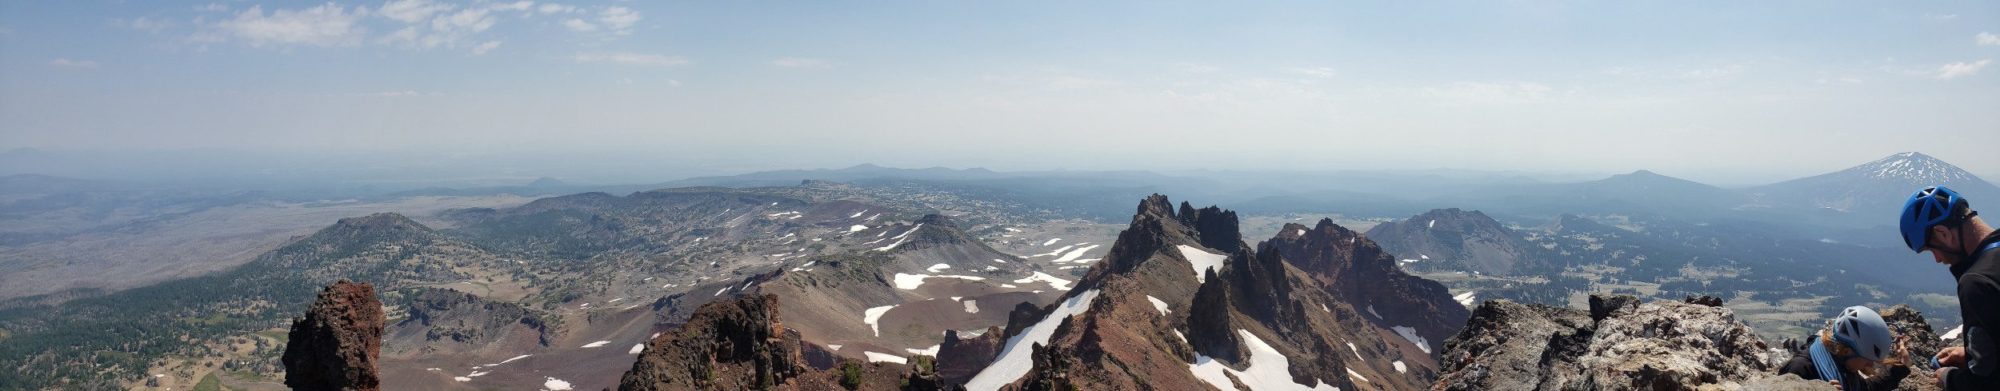 summit panorama from broken top mountain oregon